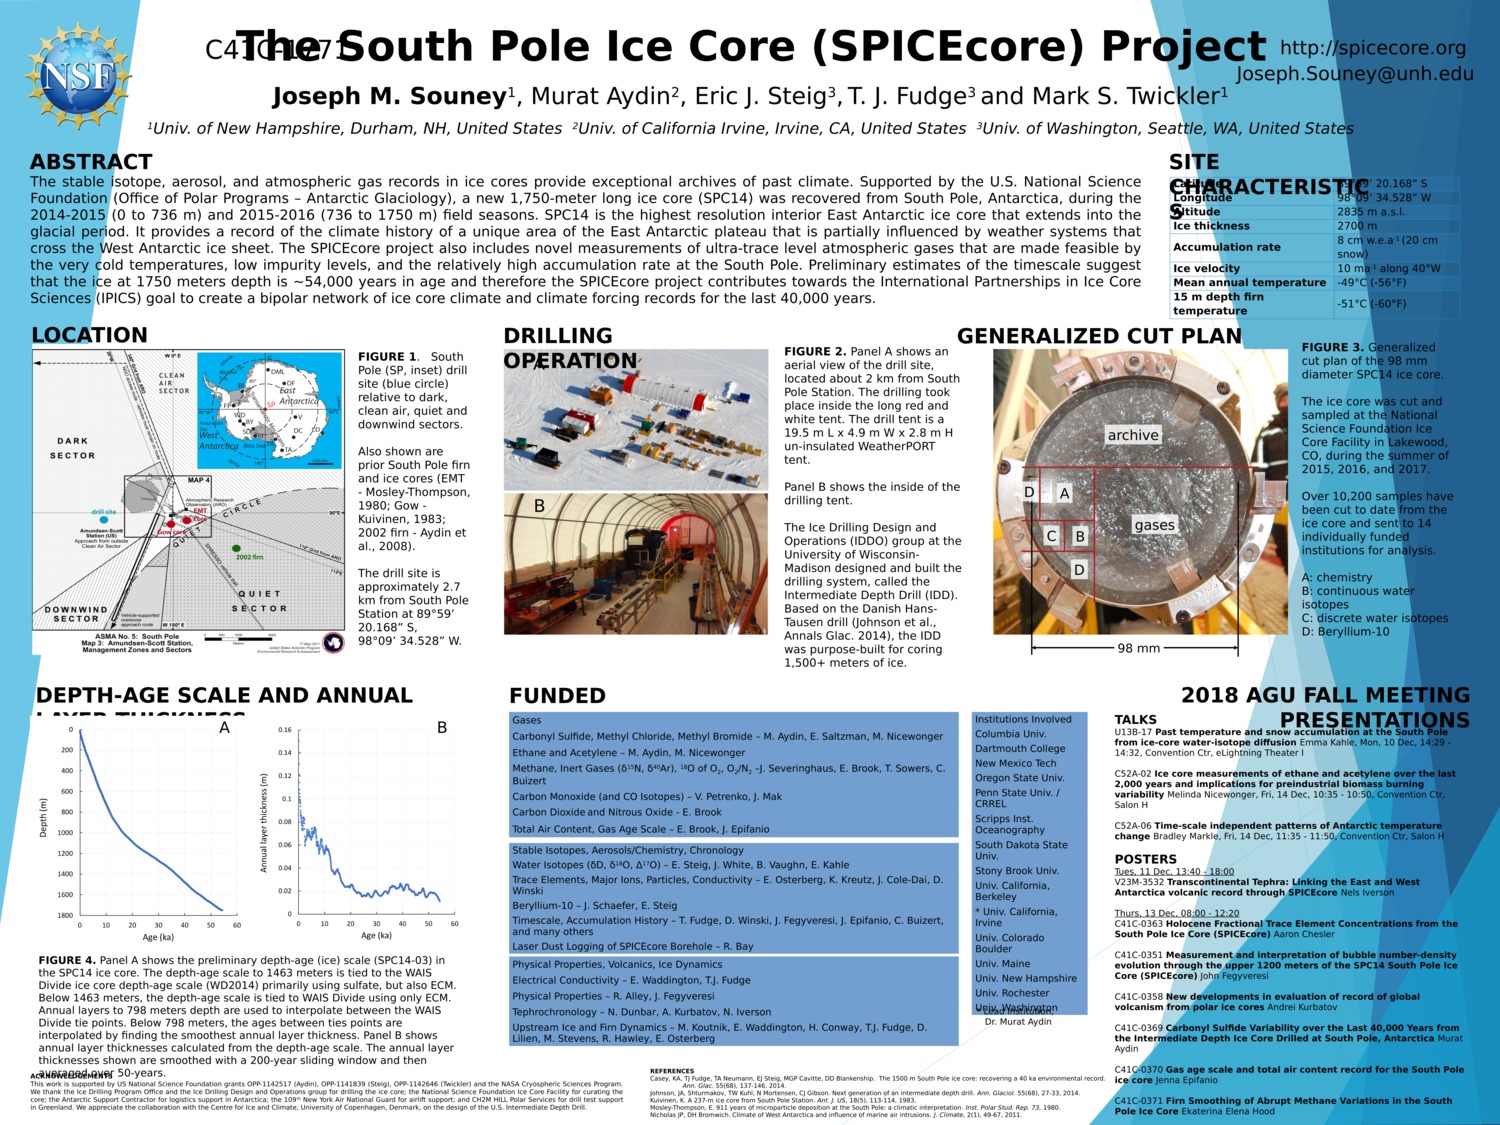 The South Pole Ice Core (Spicecore) Project by jmsouney